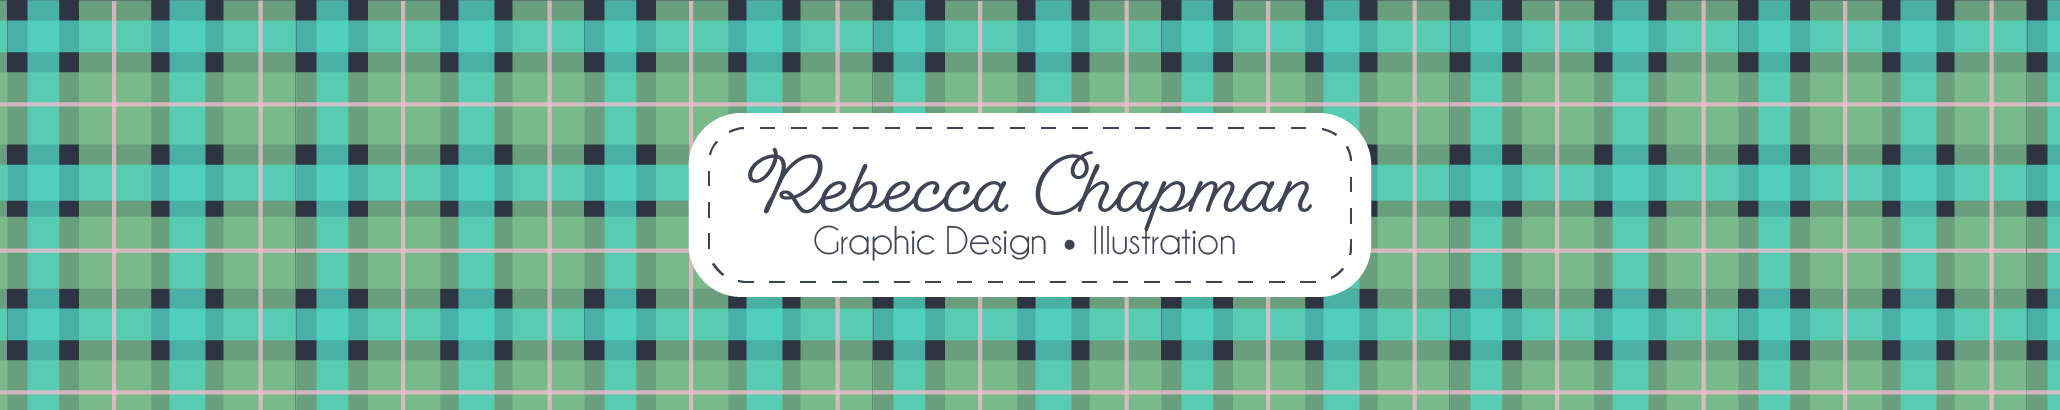 Rebecca Chapmans profilbanner